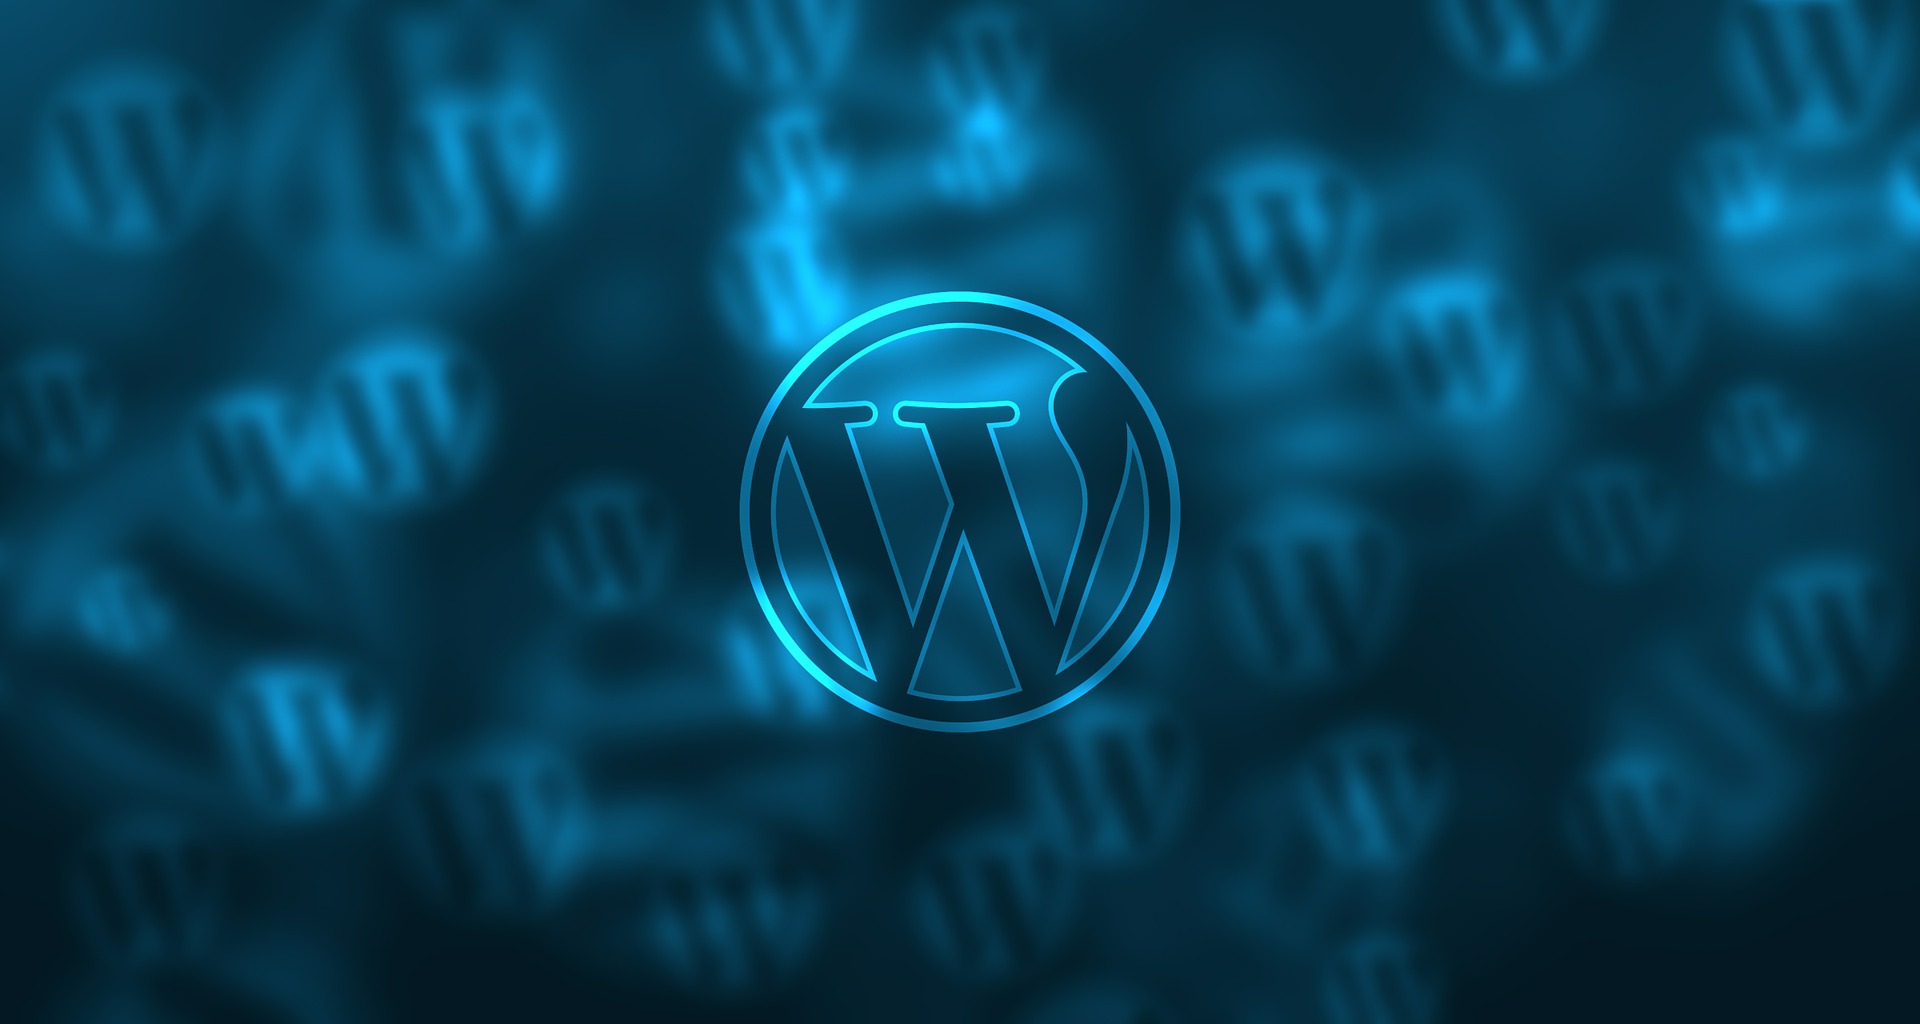 Free WordPress Blog Theme